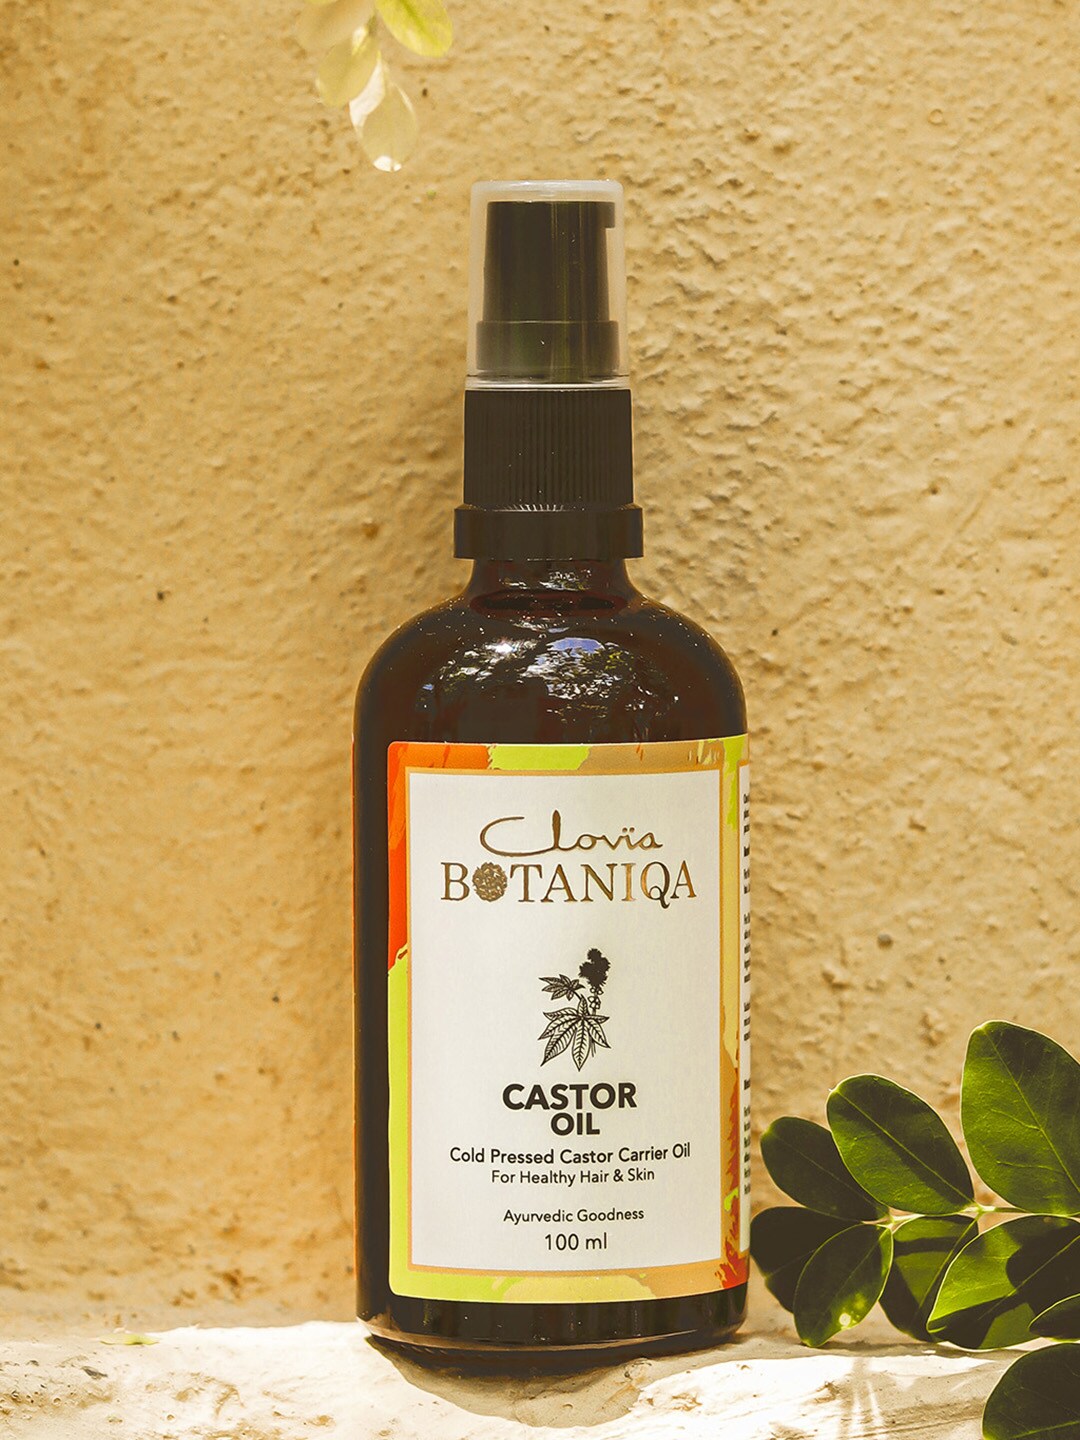 Clovia BOTANIQA Castor Carrier Oil For Hair & Skin - 100 ml Price in India